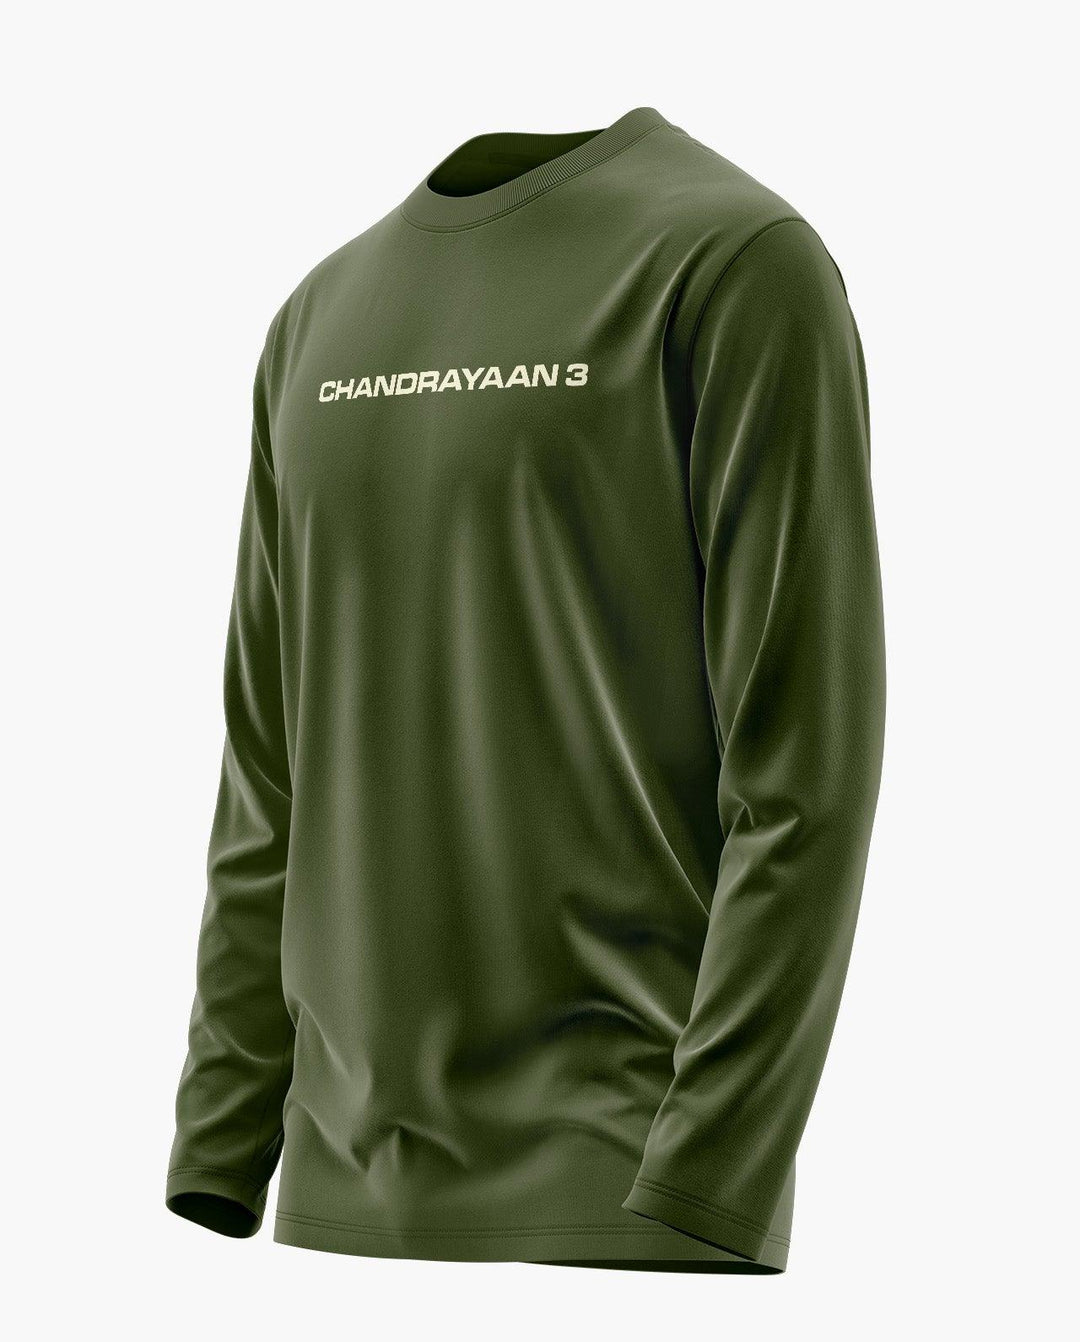 MILESTONE CHANDRAYAAN-3 Full Sleeve T-Shirt - Aero Armour